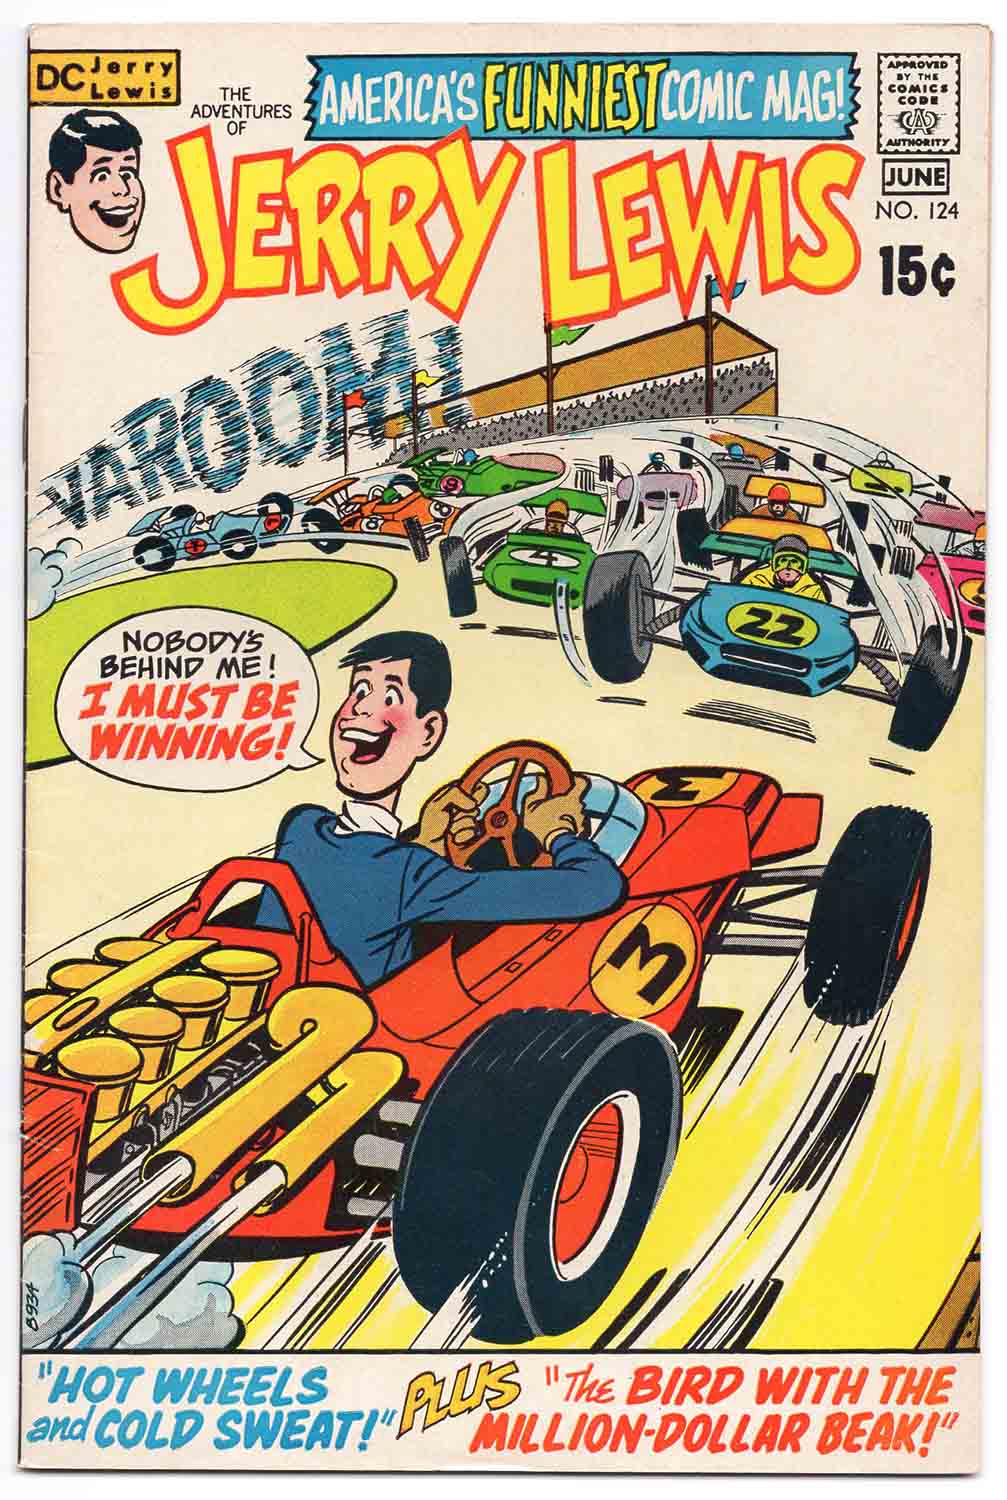 Adventures of Jerry Lewis #124